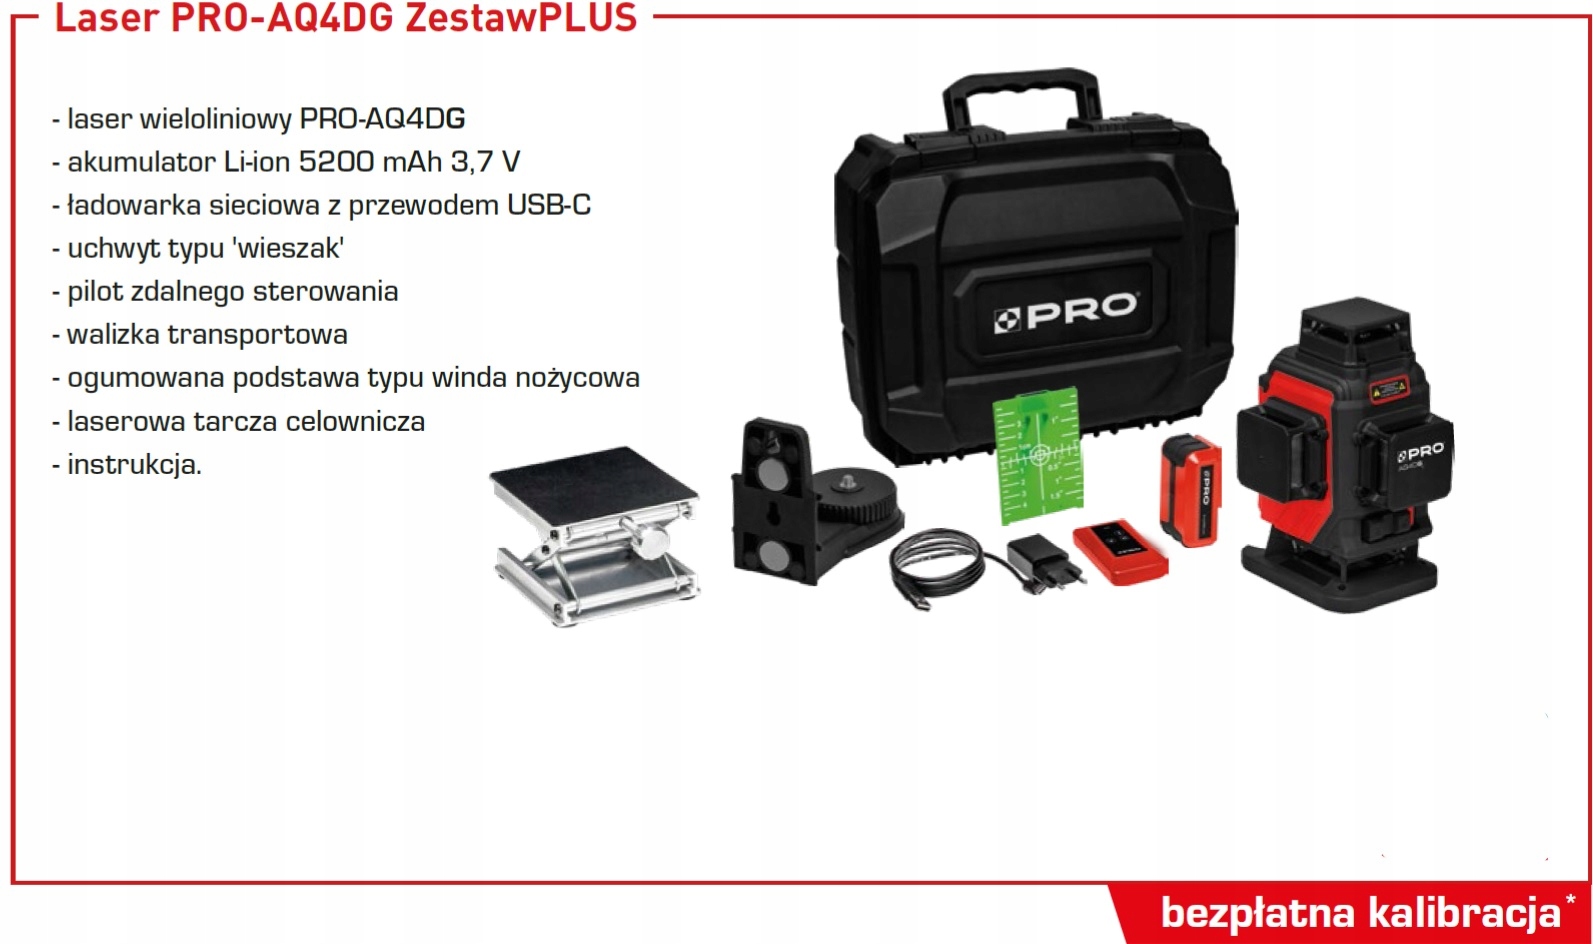 Laser Wieloliniowy 4D PRO PRO-AQ4DG ZESTAW PLUS Kod producenta PRO-L1210